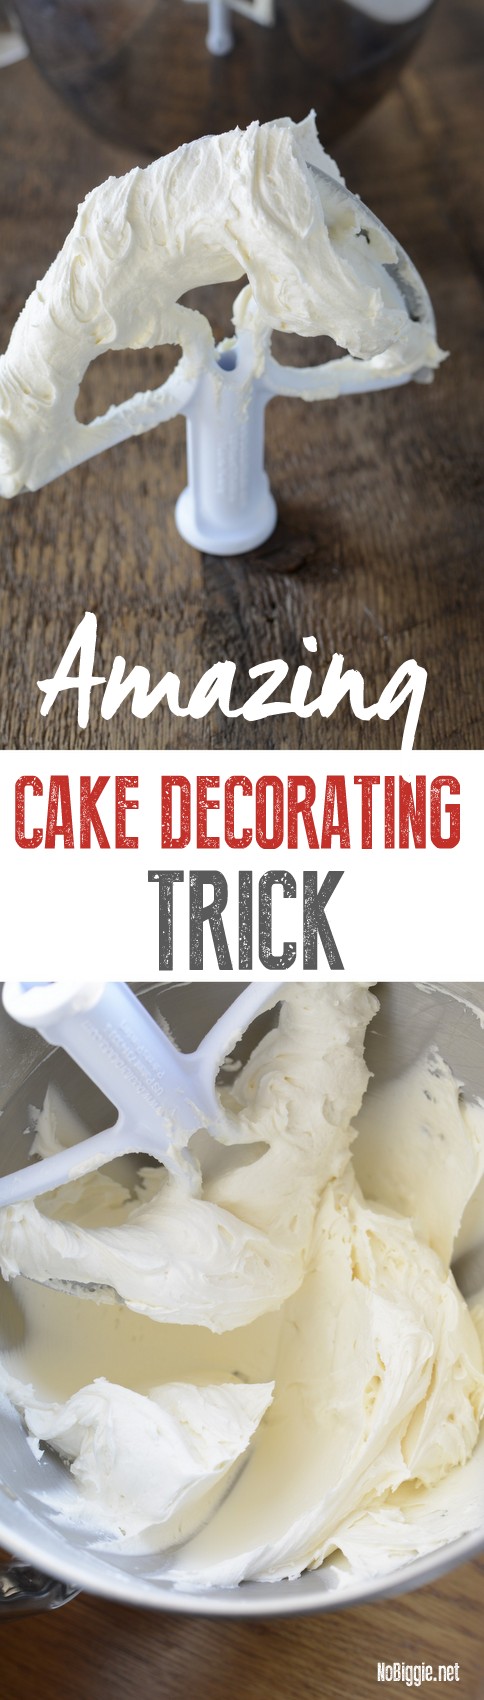 Amazing cake decorating trick | NoBiggie.net